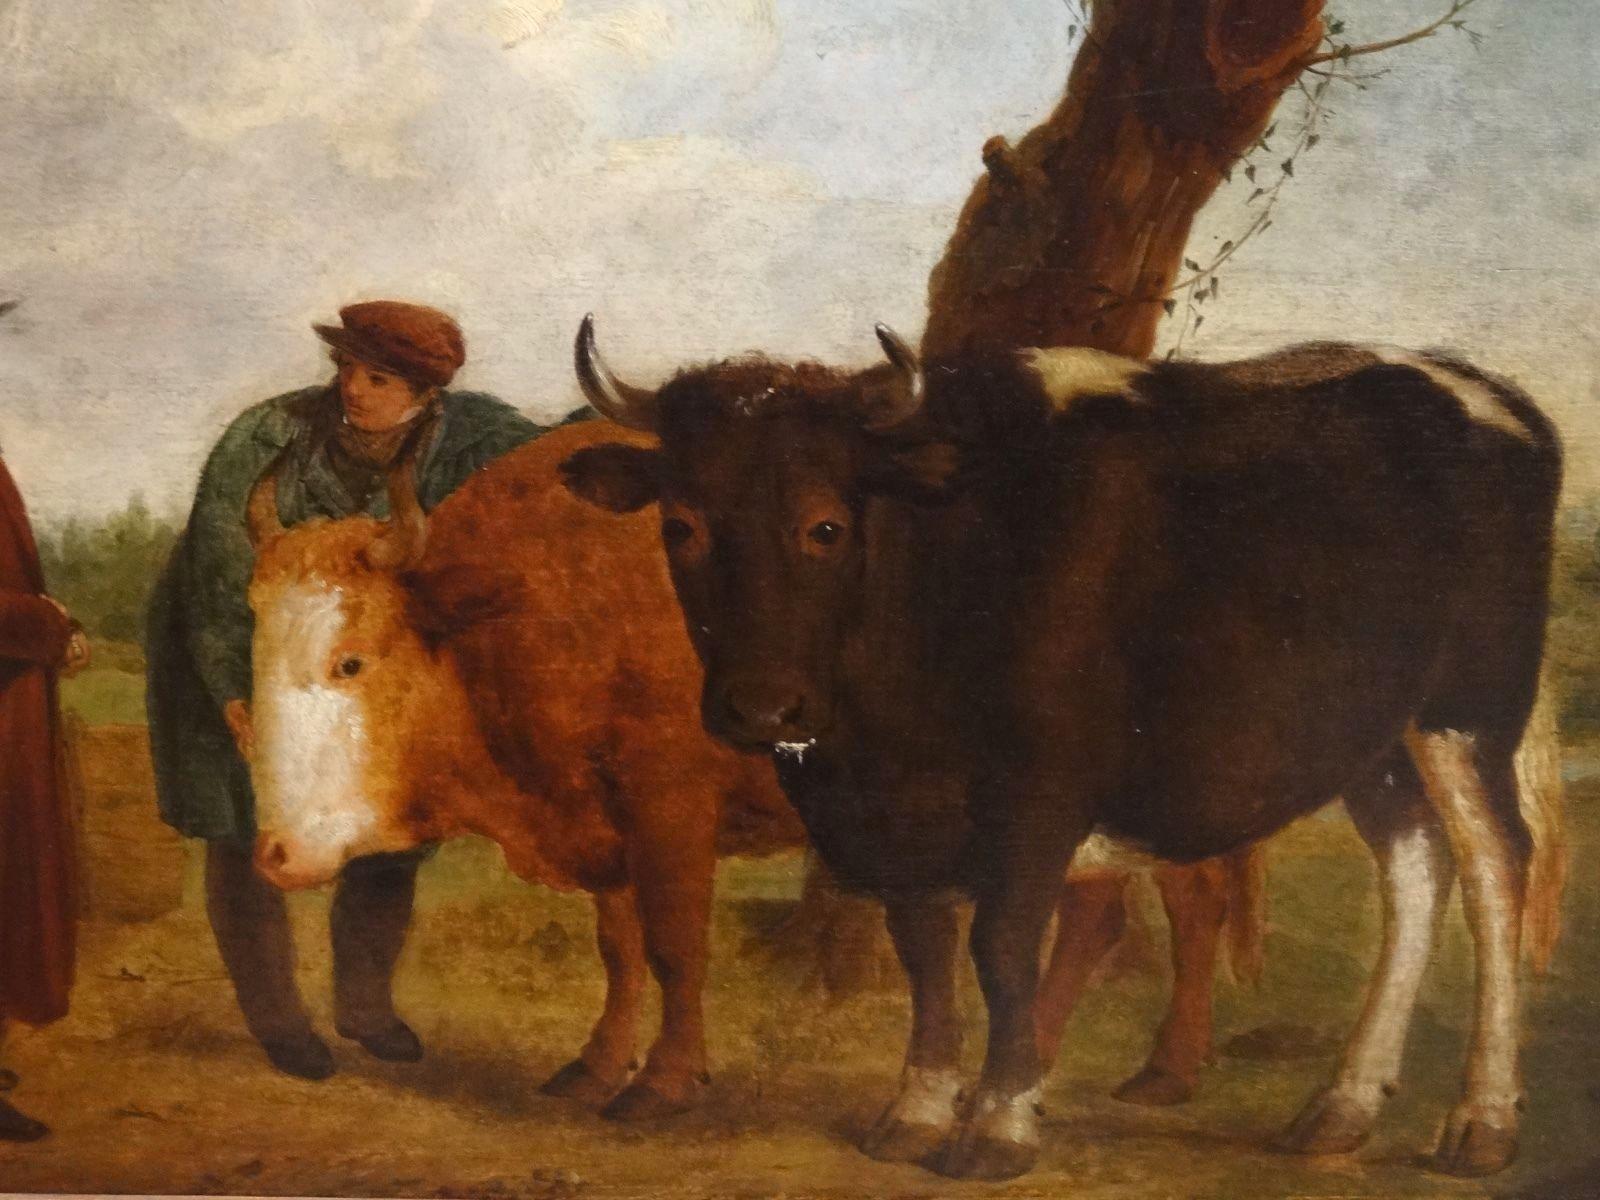 18th century farmer